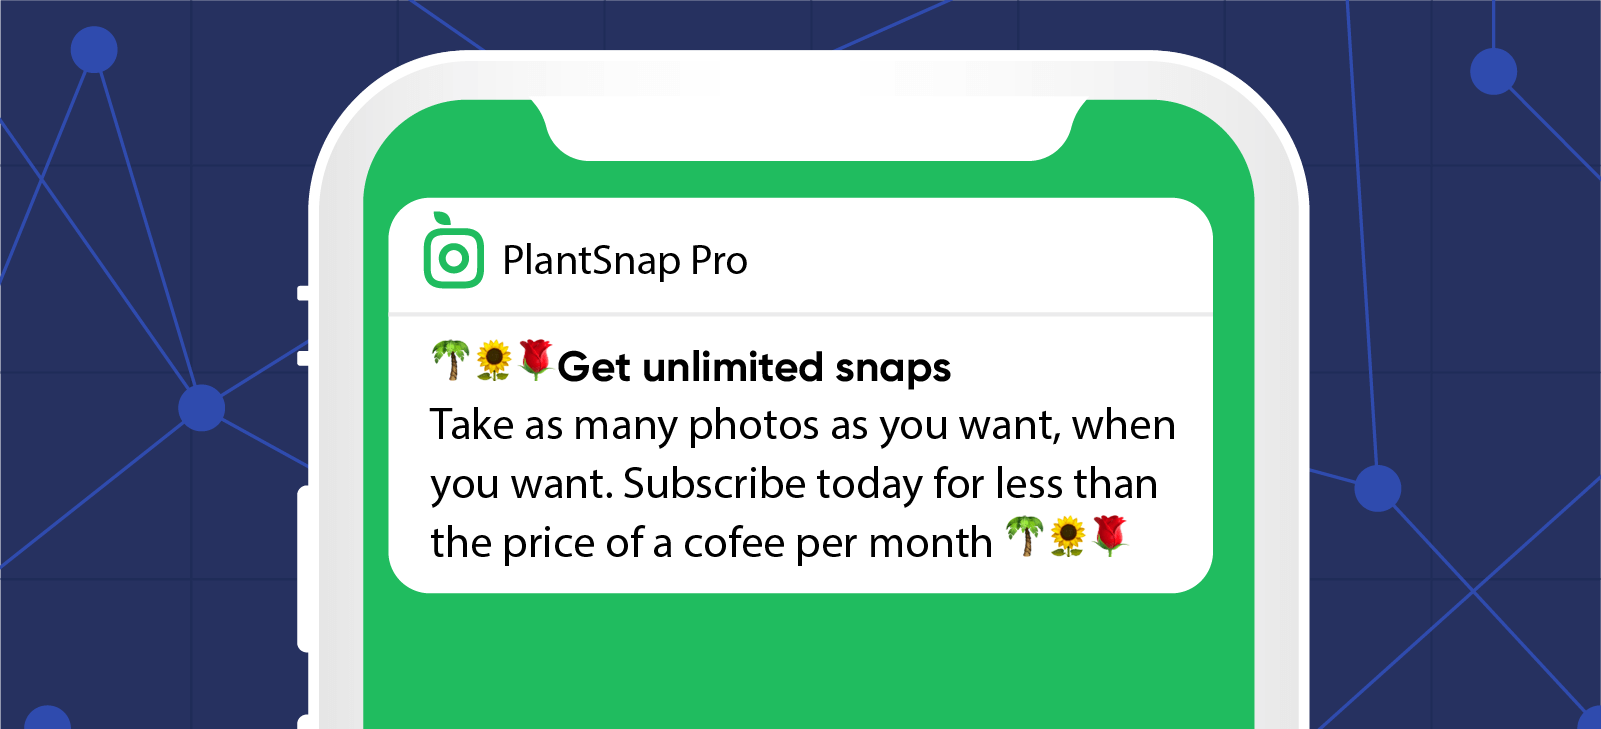 CleverTap PlantSnap partnership